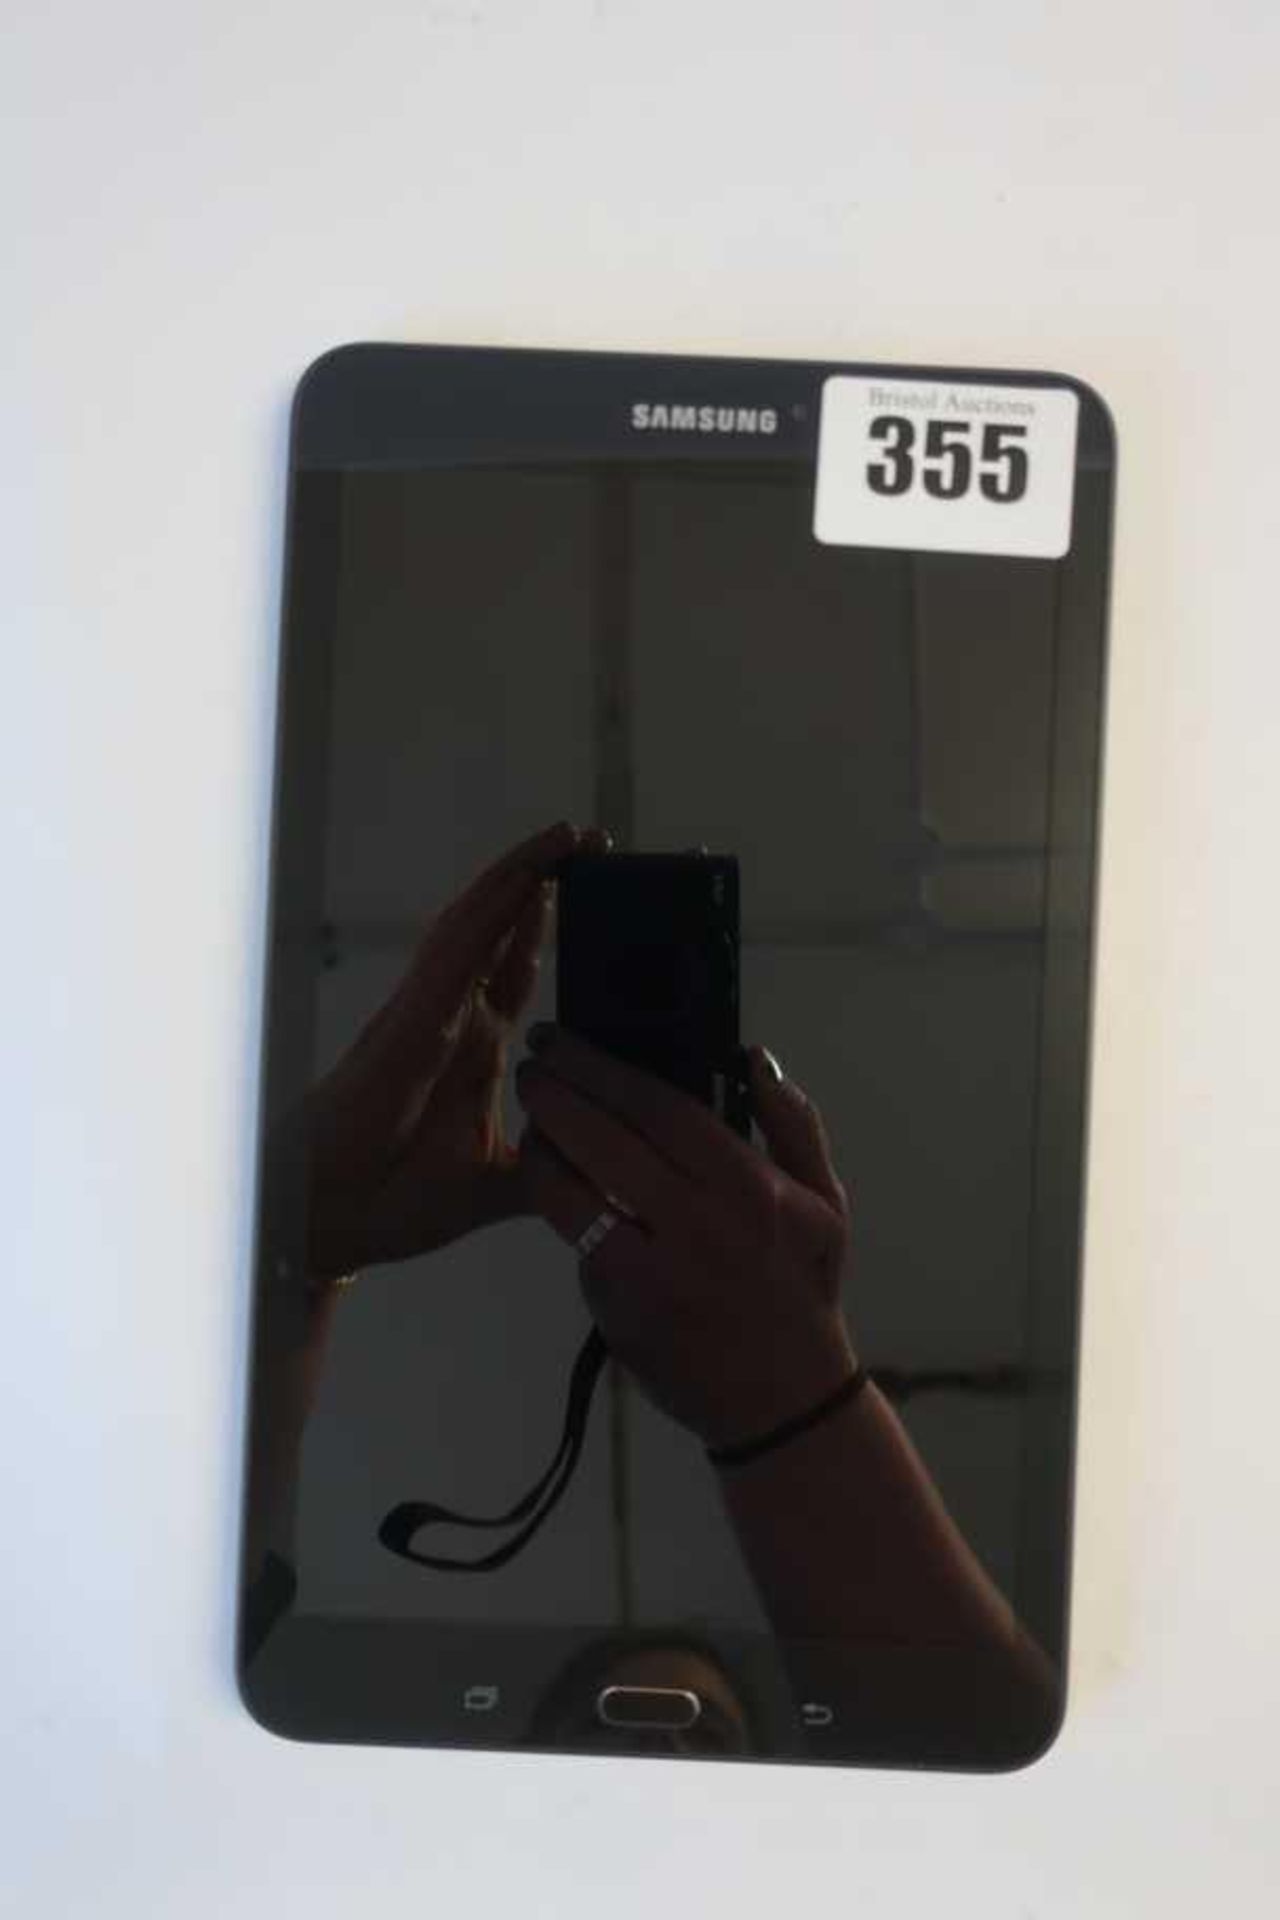 A pre-owned Samsung Galaxy Tab E 8.0 (AT&T) SM-T377A 16GB (IMEI: 353608074945927) (FRP clear).